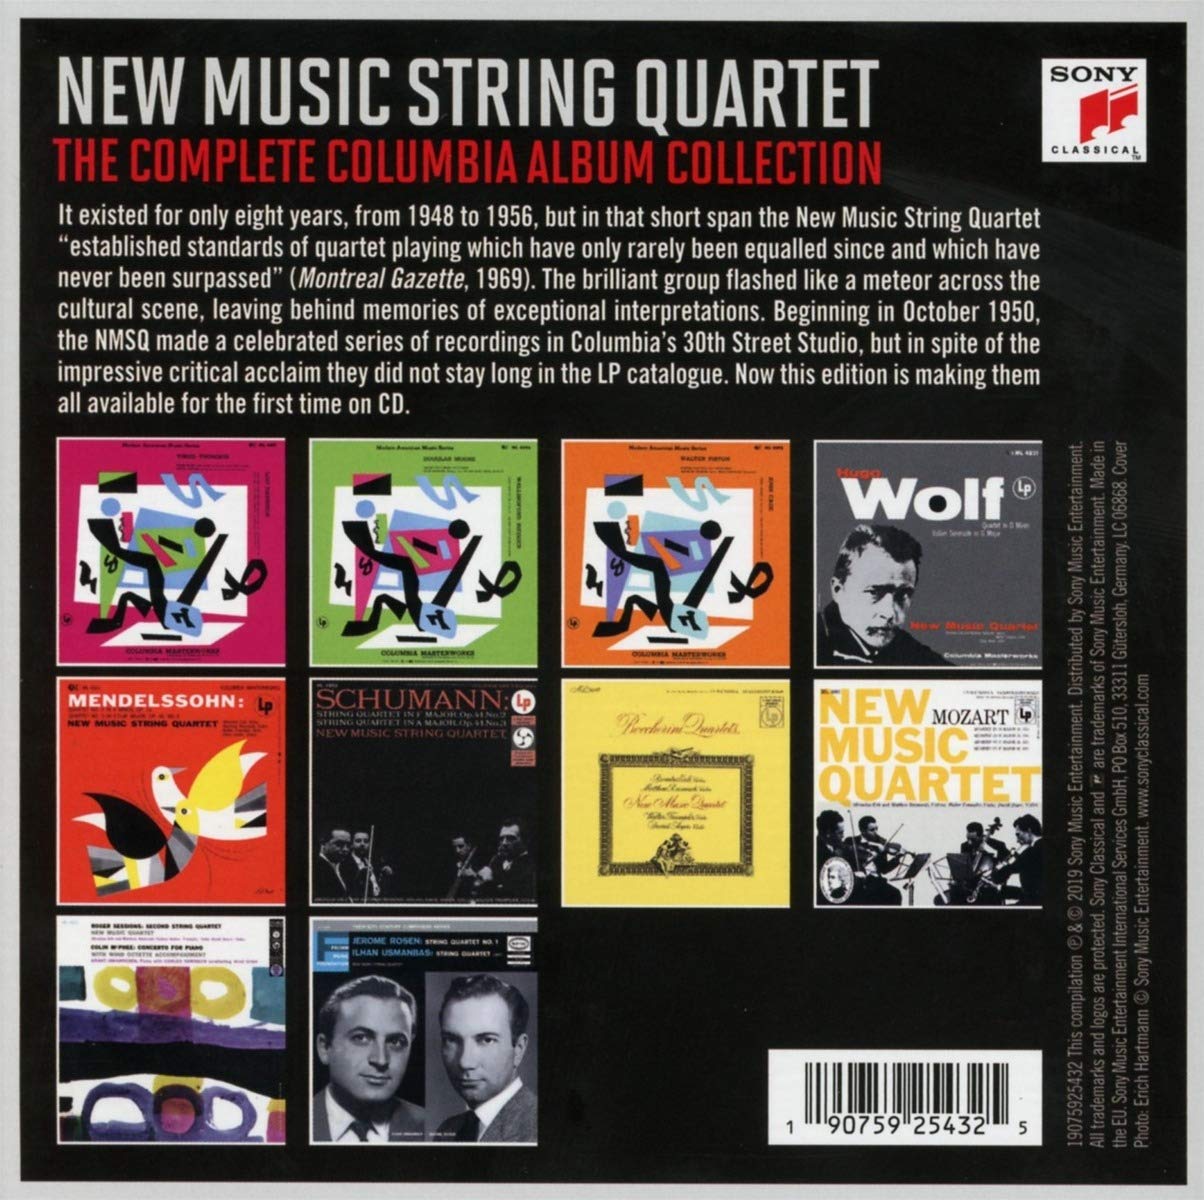 New Music String Quartet 뉴 뮤직 현악 사중주단 콜롬비아 녹음 전집 (The Complete Columbia Album Collection)